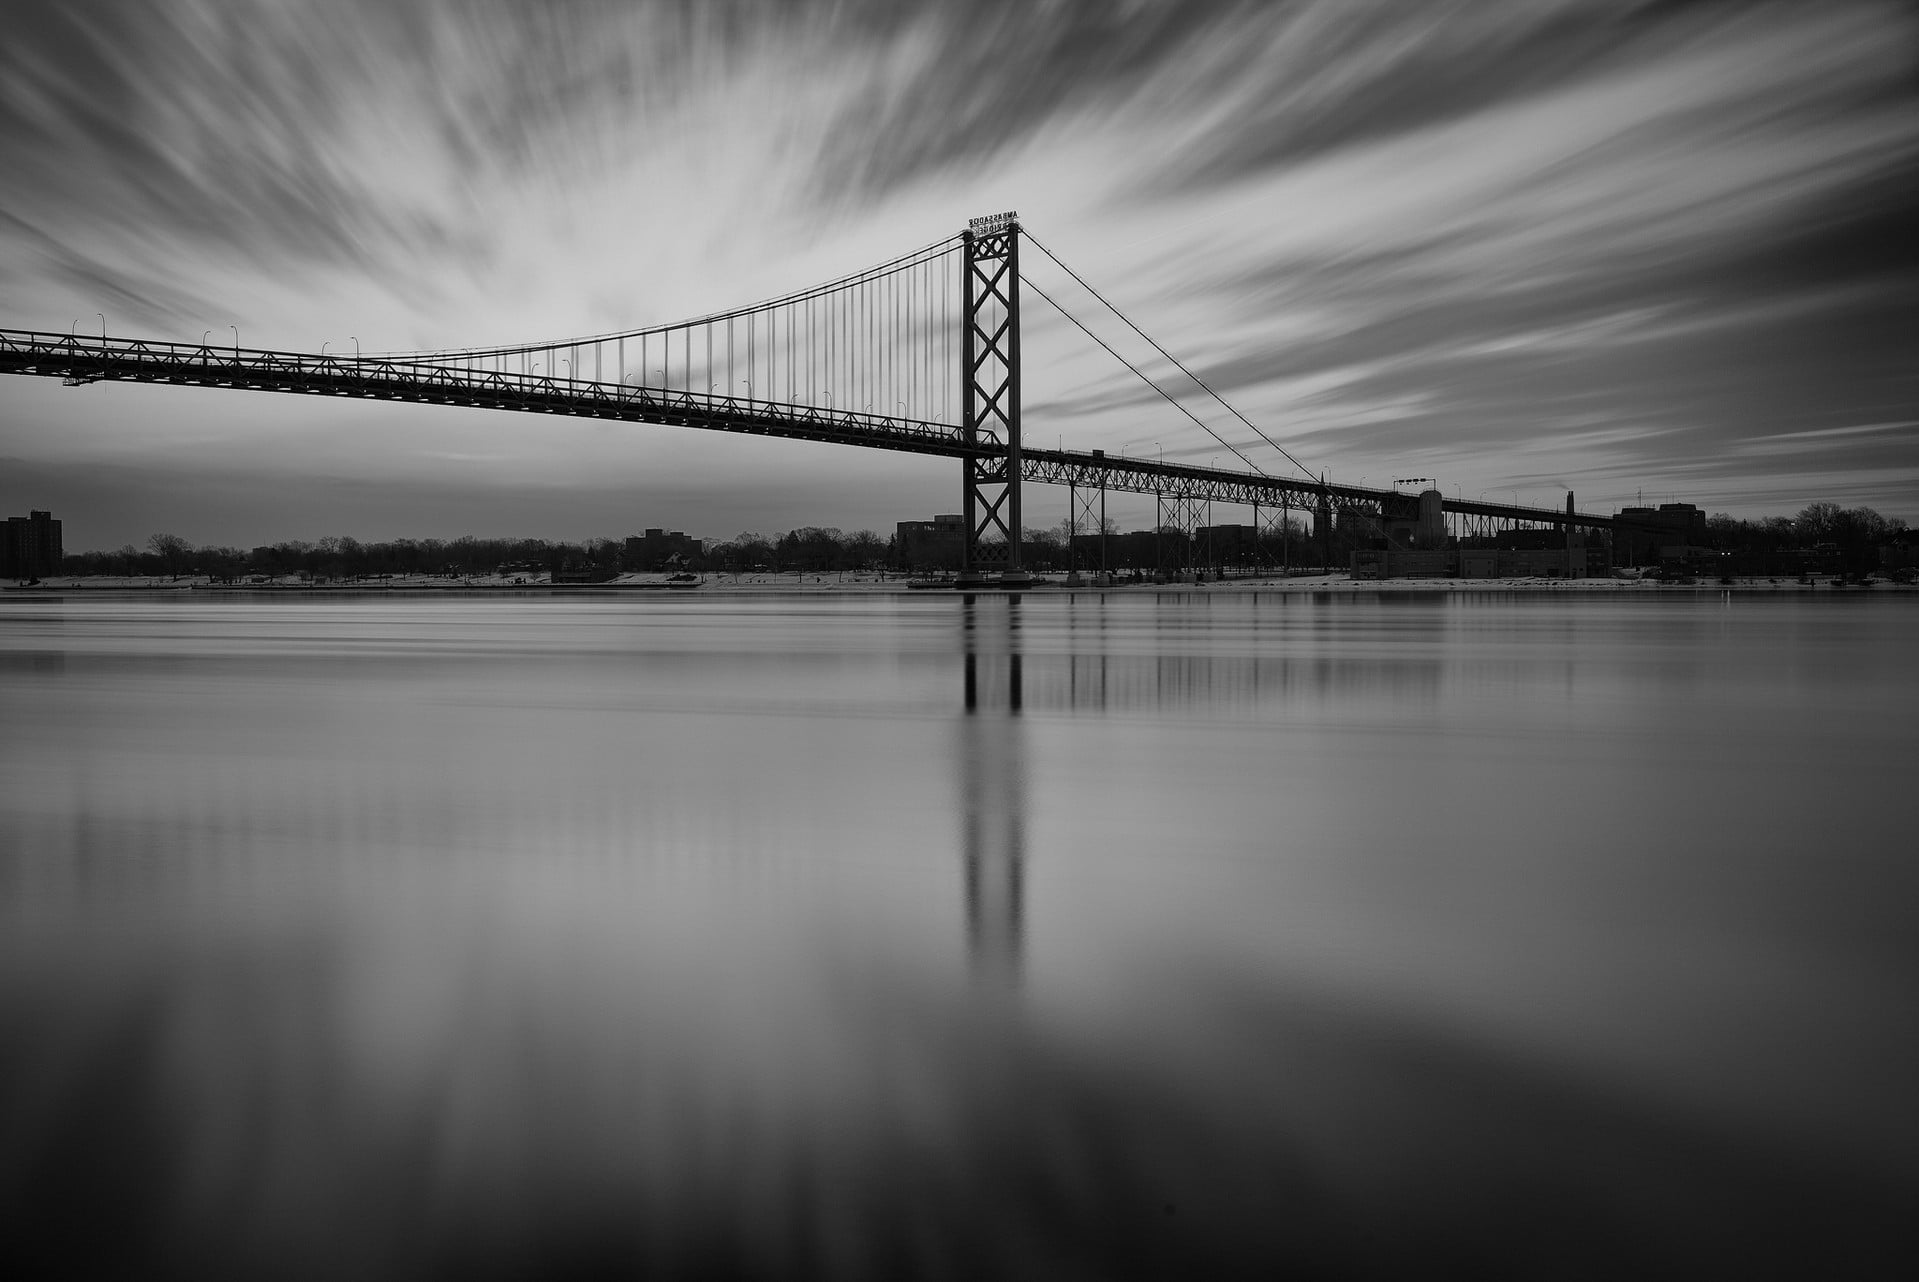 grayscale photography of suspension bridge, bridge, monochrome